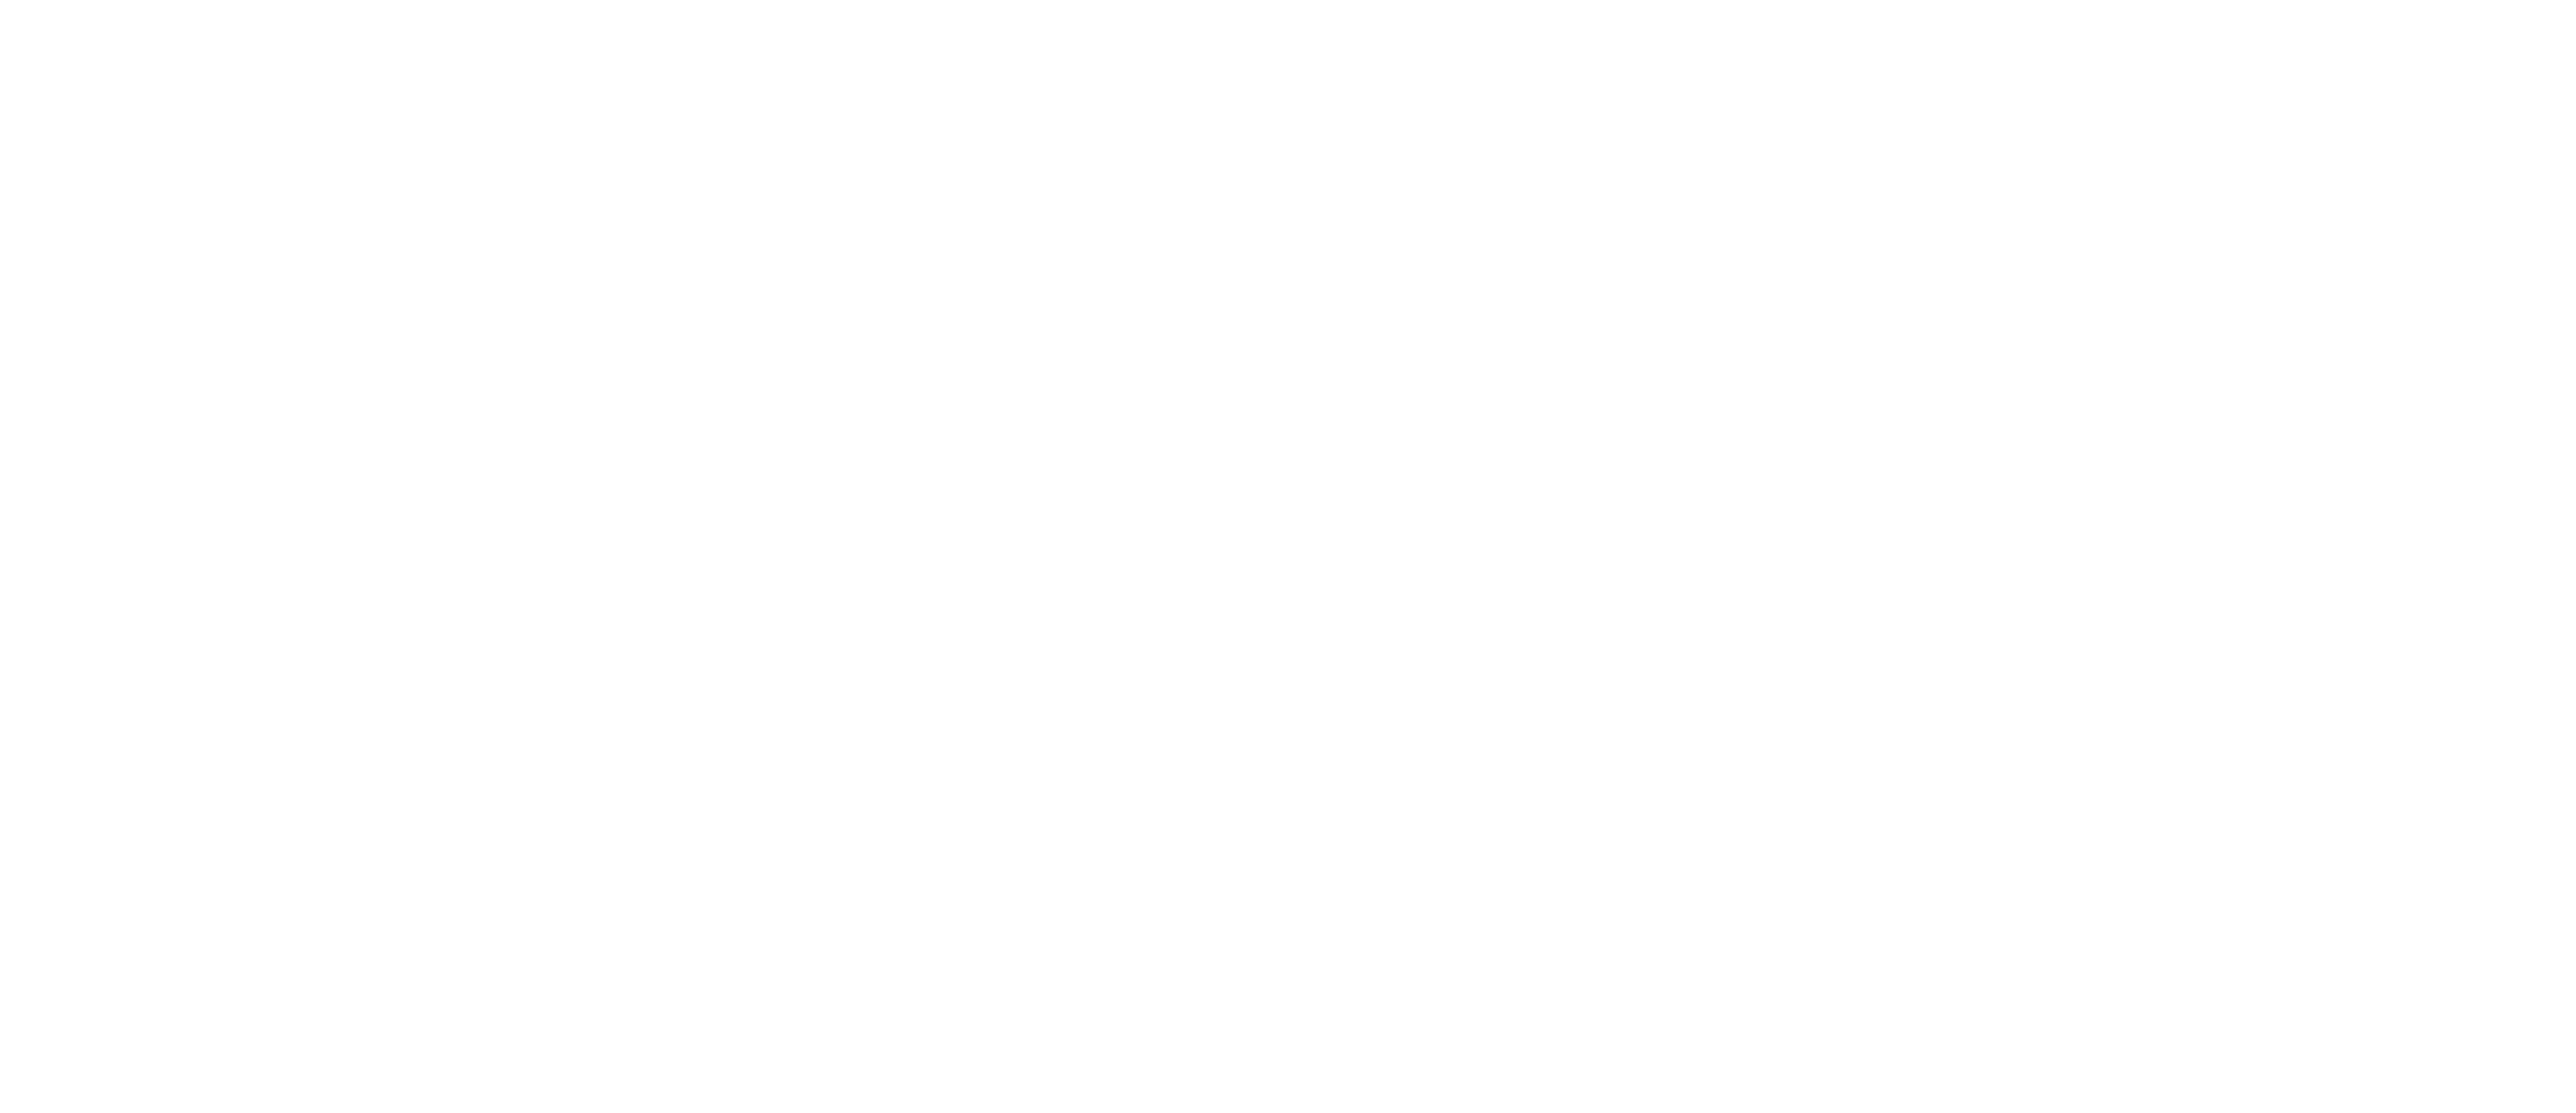 Freddy Mamani logos white-41